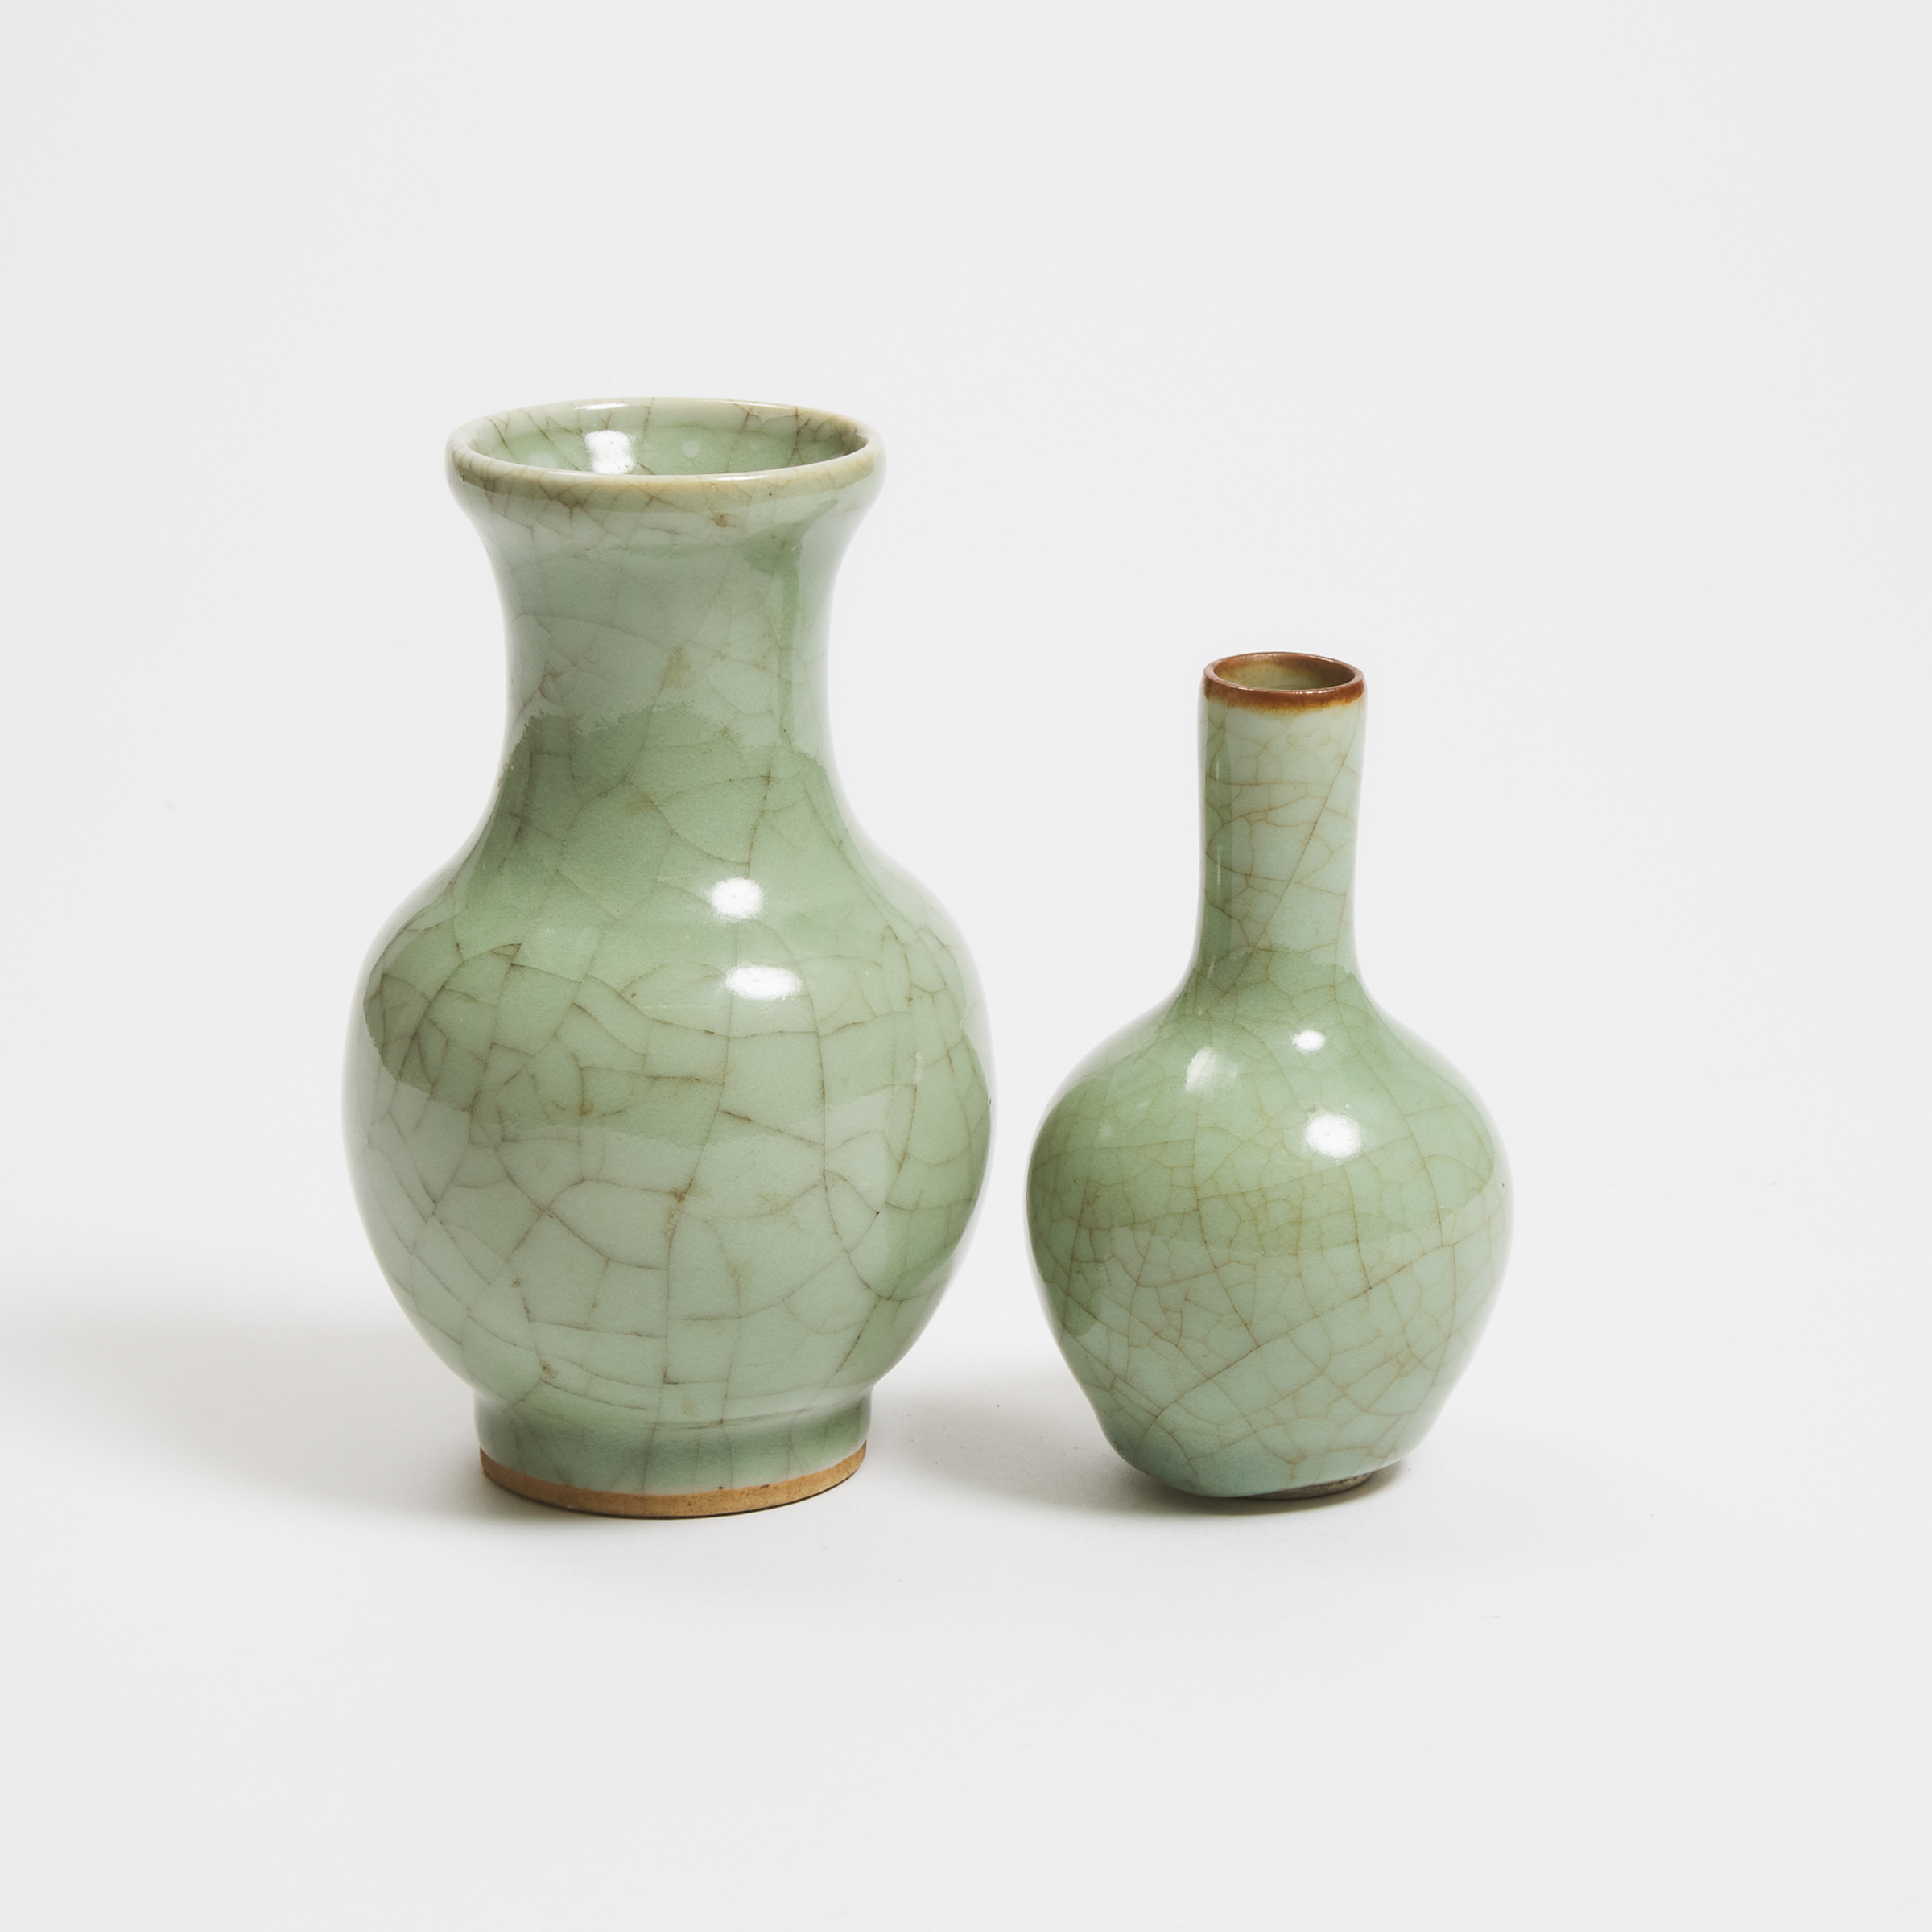 Two Celadon Crackled-Glazed Vases, 19th Century